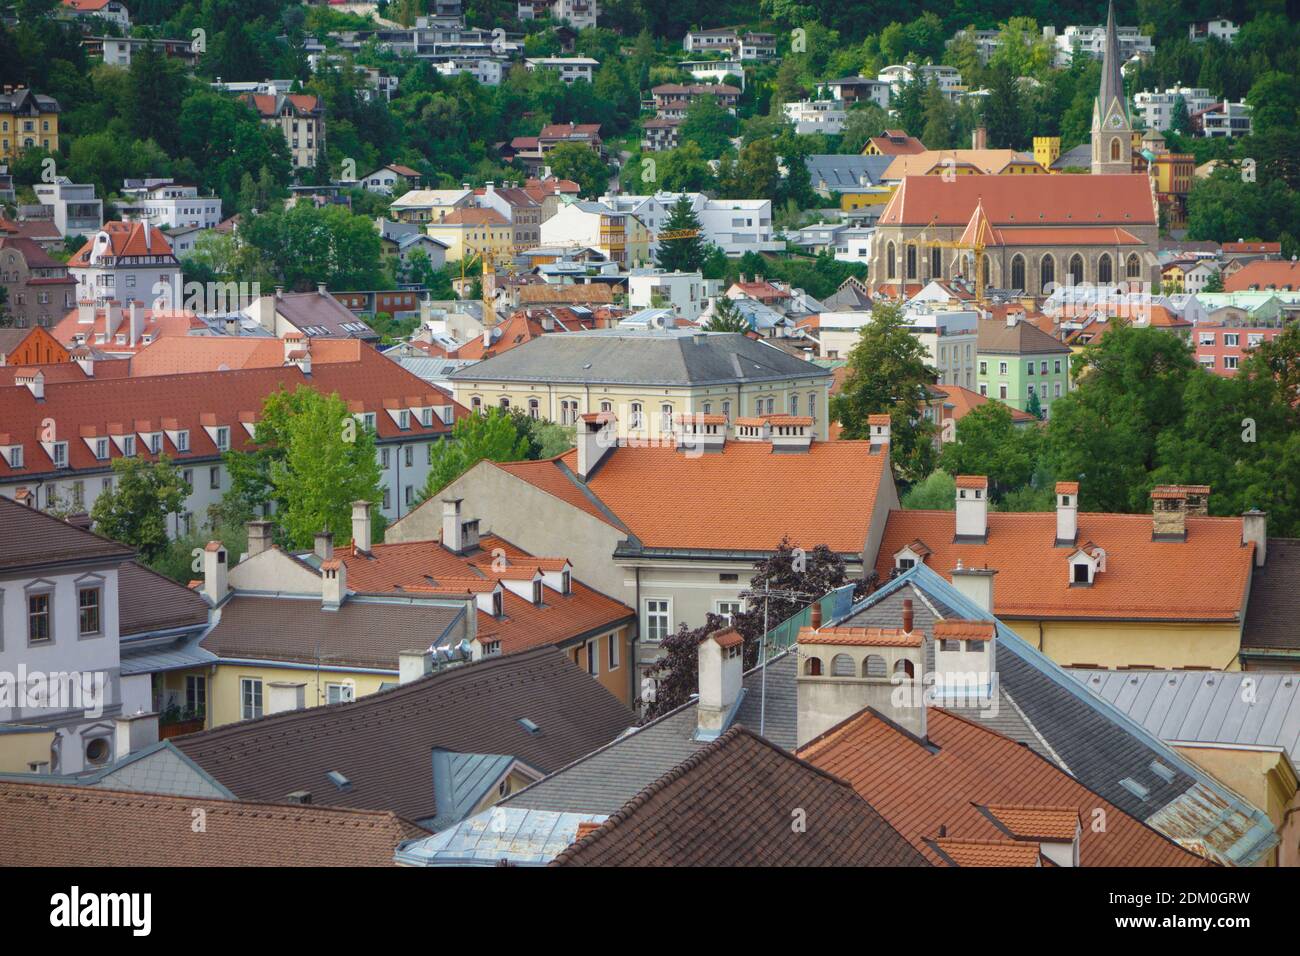 Austria: Innsbruck Stock Photo